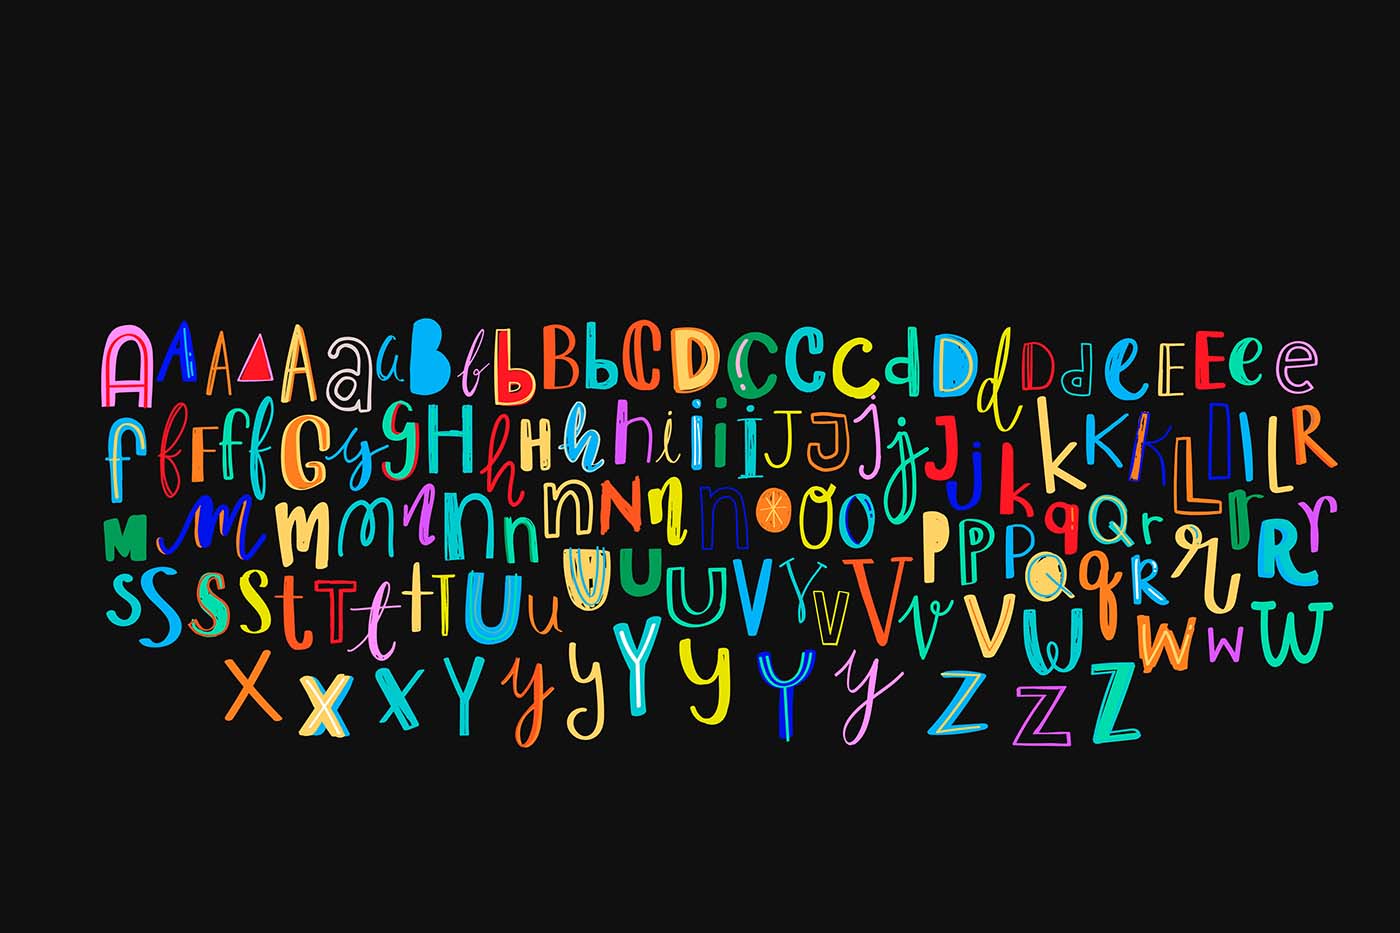 The Romanian alphabet